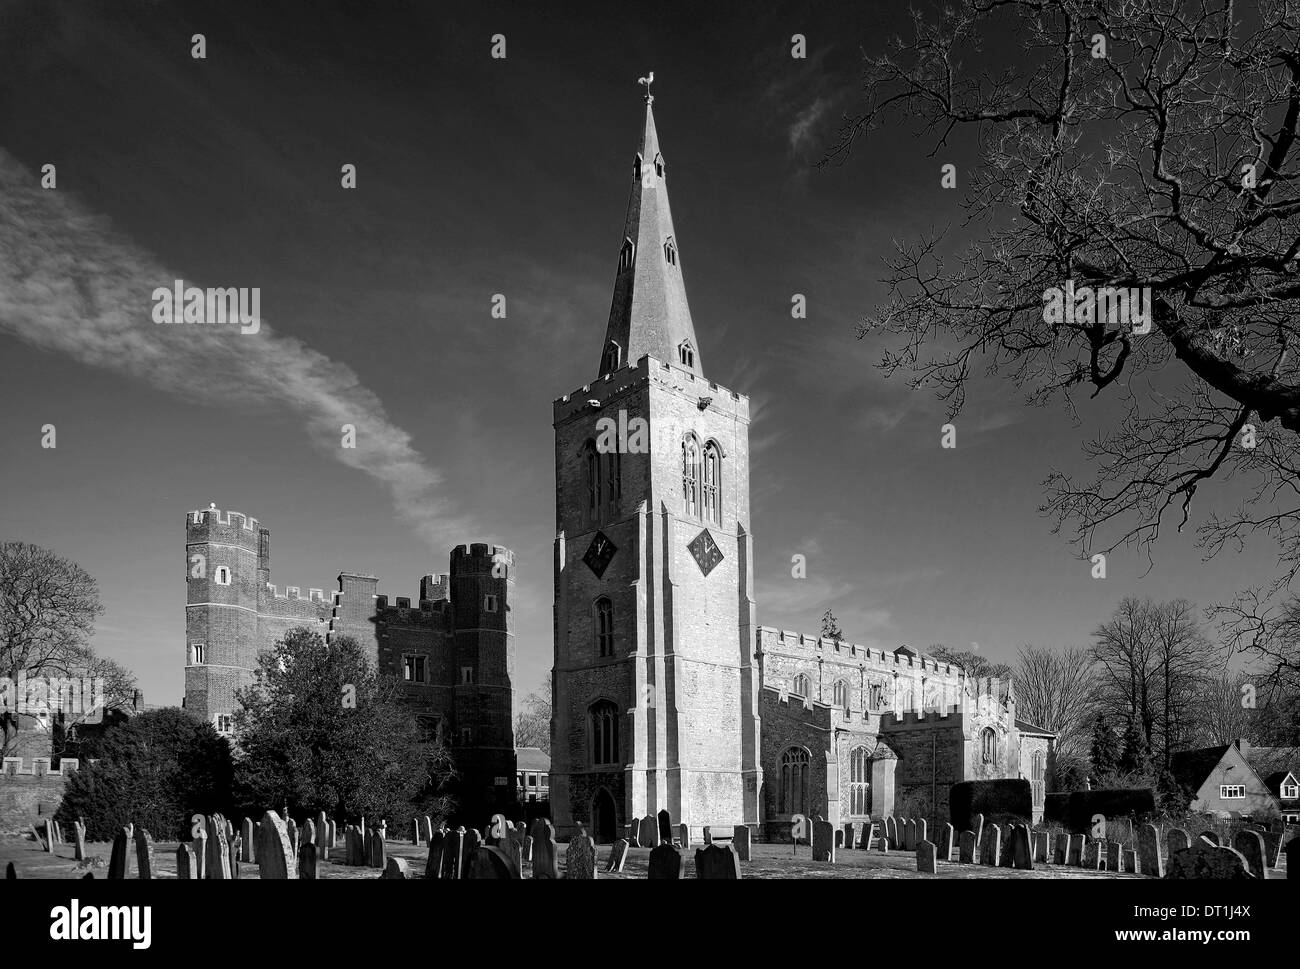 St Marys Church and Buckden Towers, Buckden village, Cambridgeshire, England; Britain; UK Stock Photo